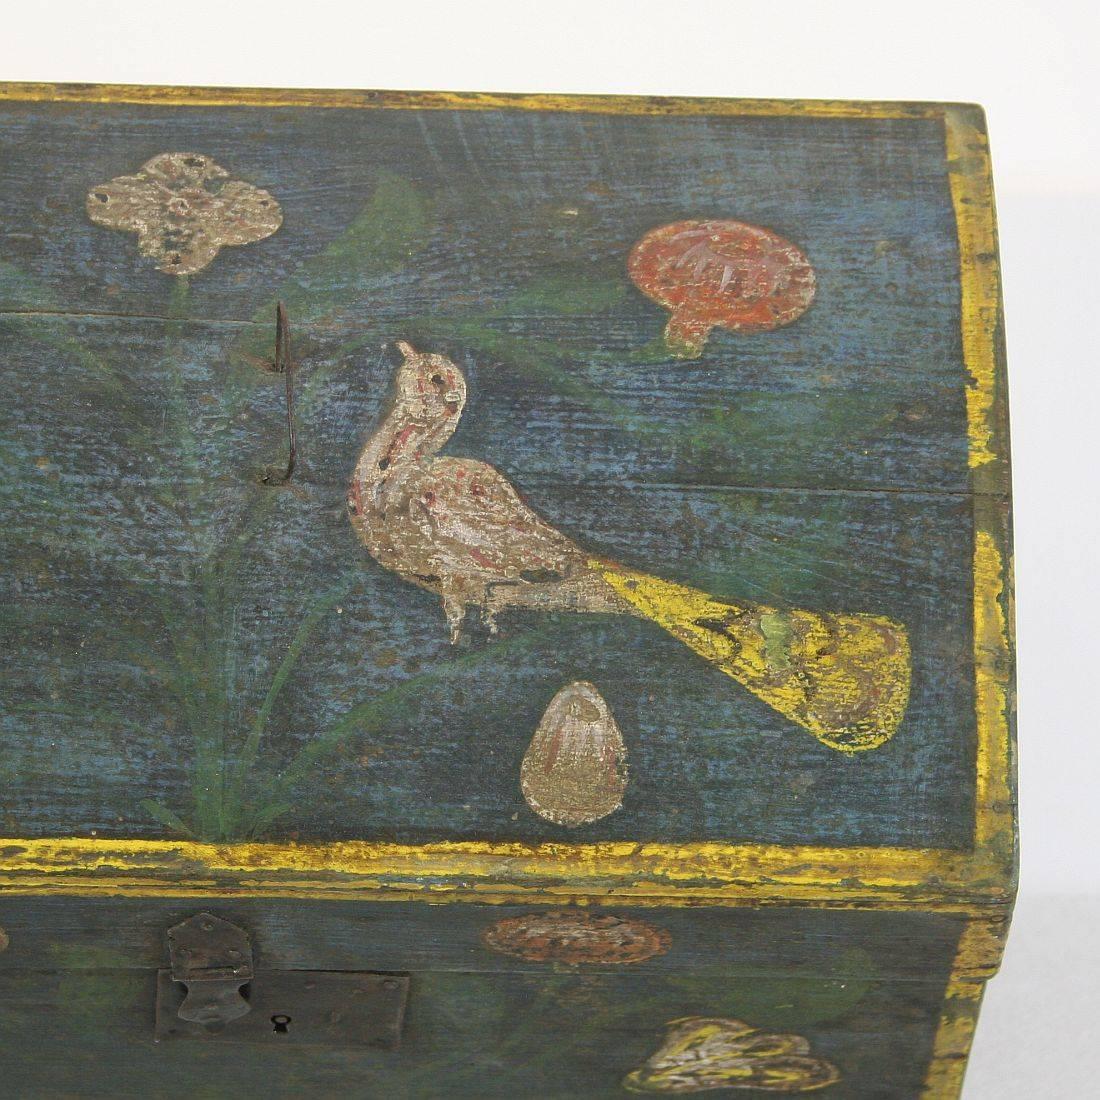 19th Century French Folk Art Weddingbox with a Bird from Normandy 3